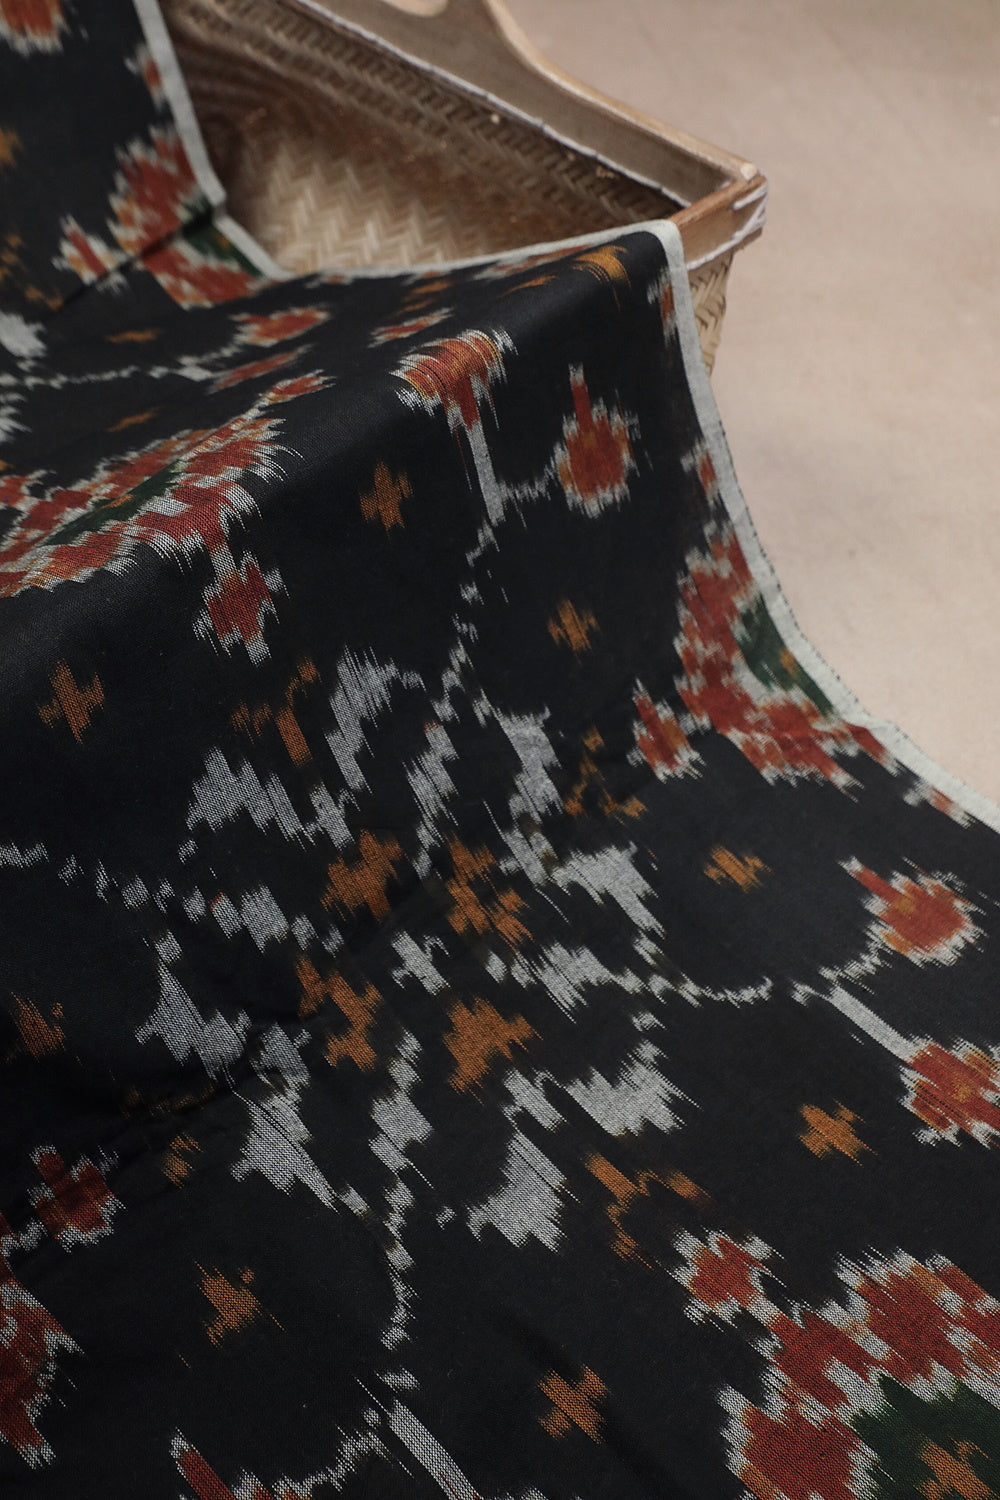 Patterned on Black Ikat Cotton Fabric